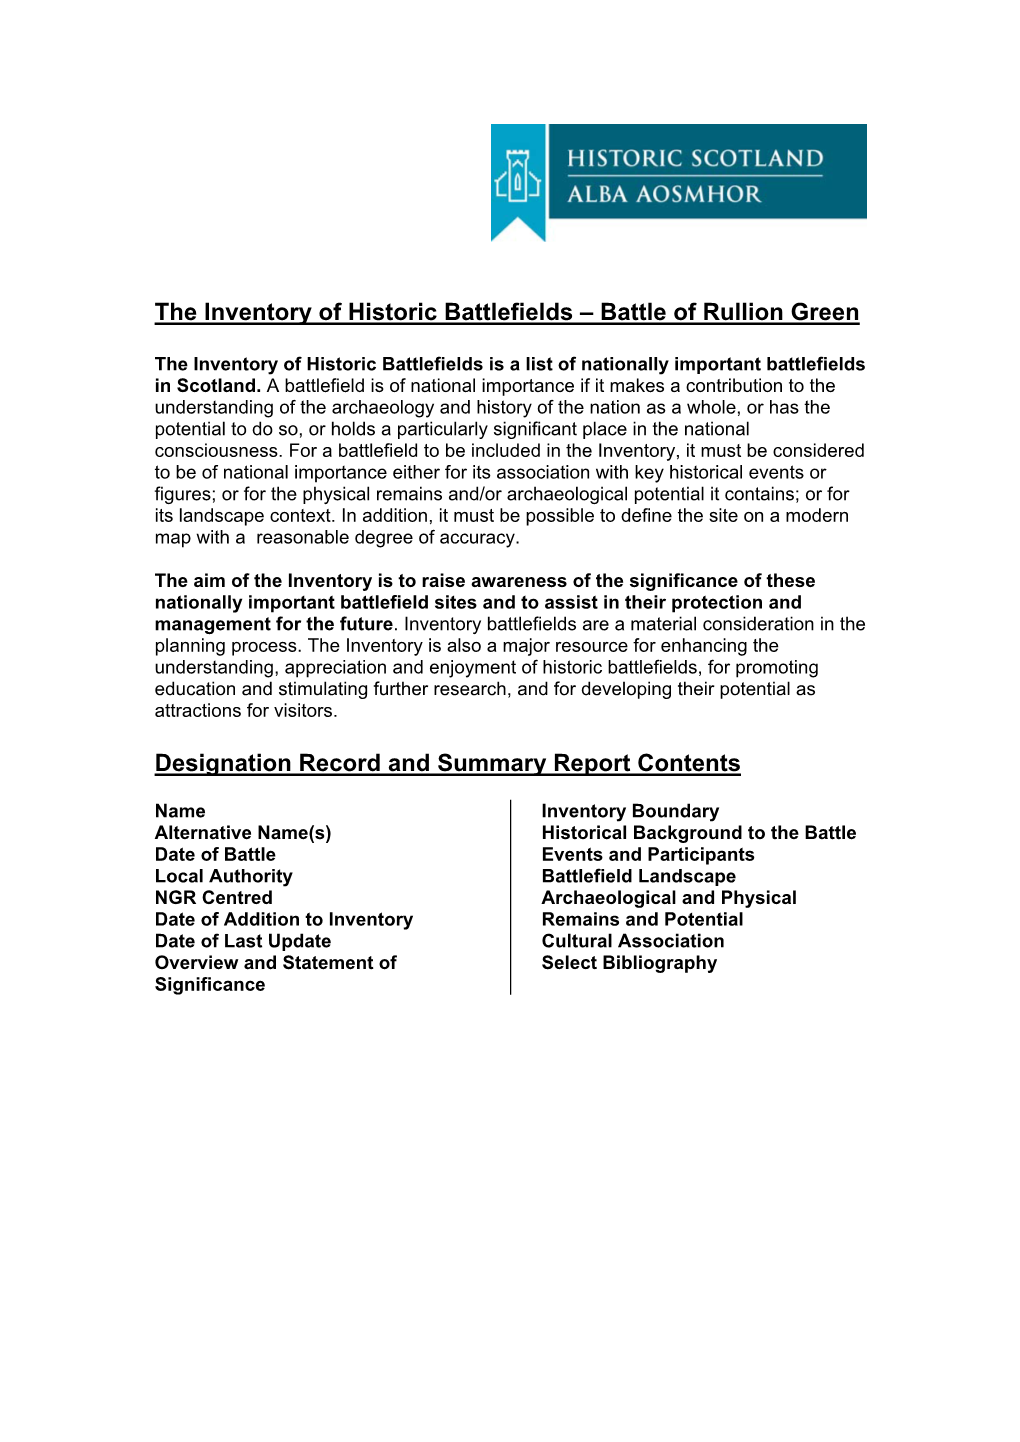 The Inventory of Historic Battlefields – Battle of Rullion Green Designation